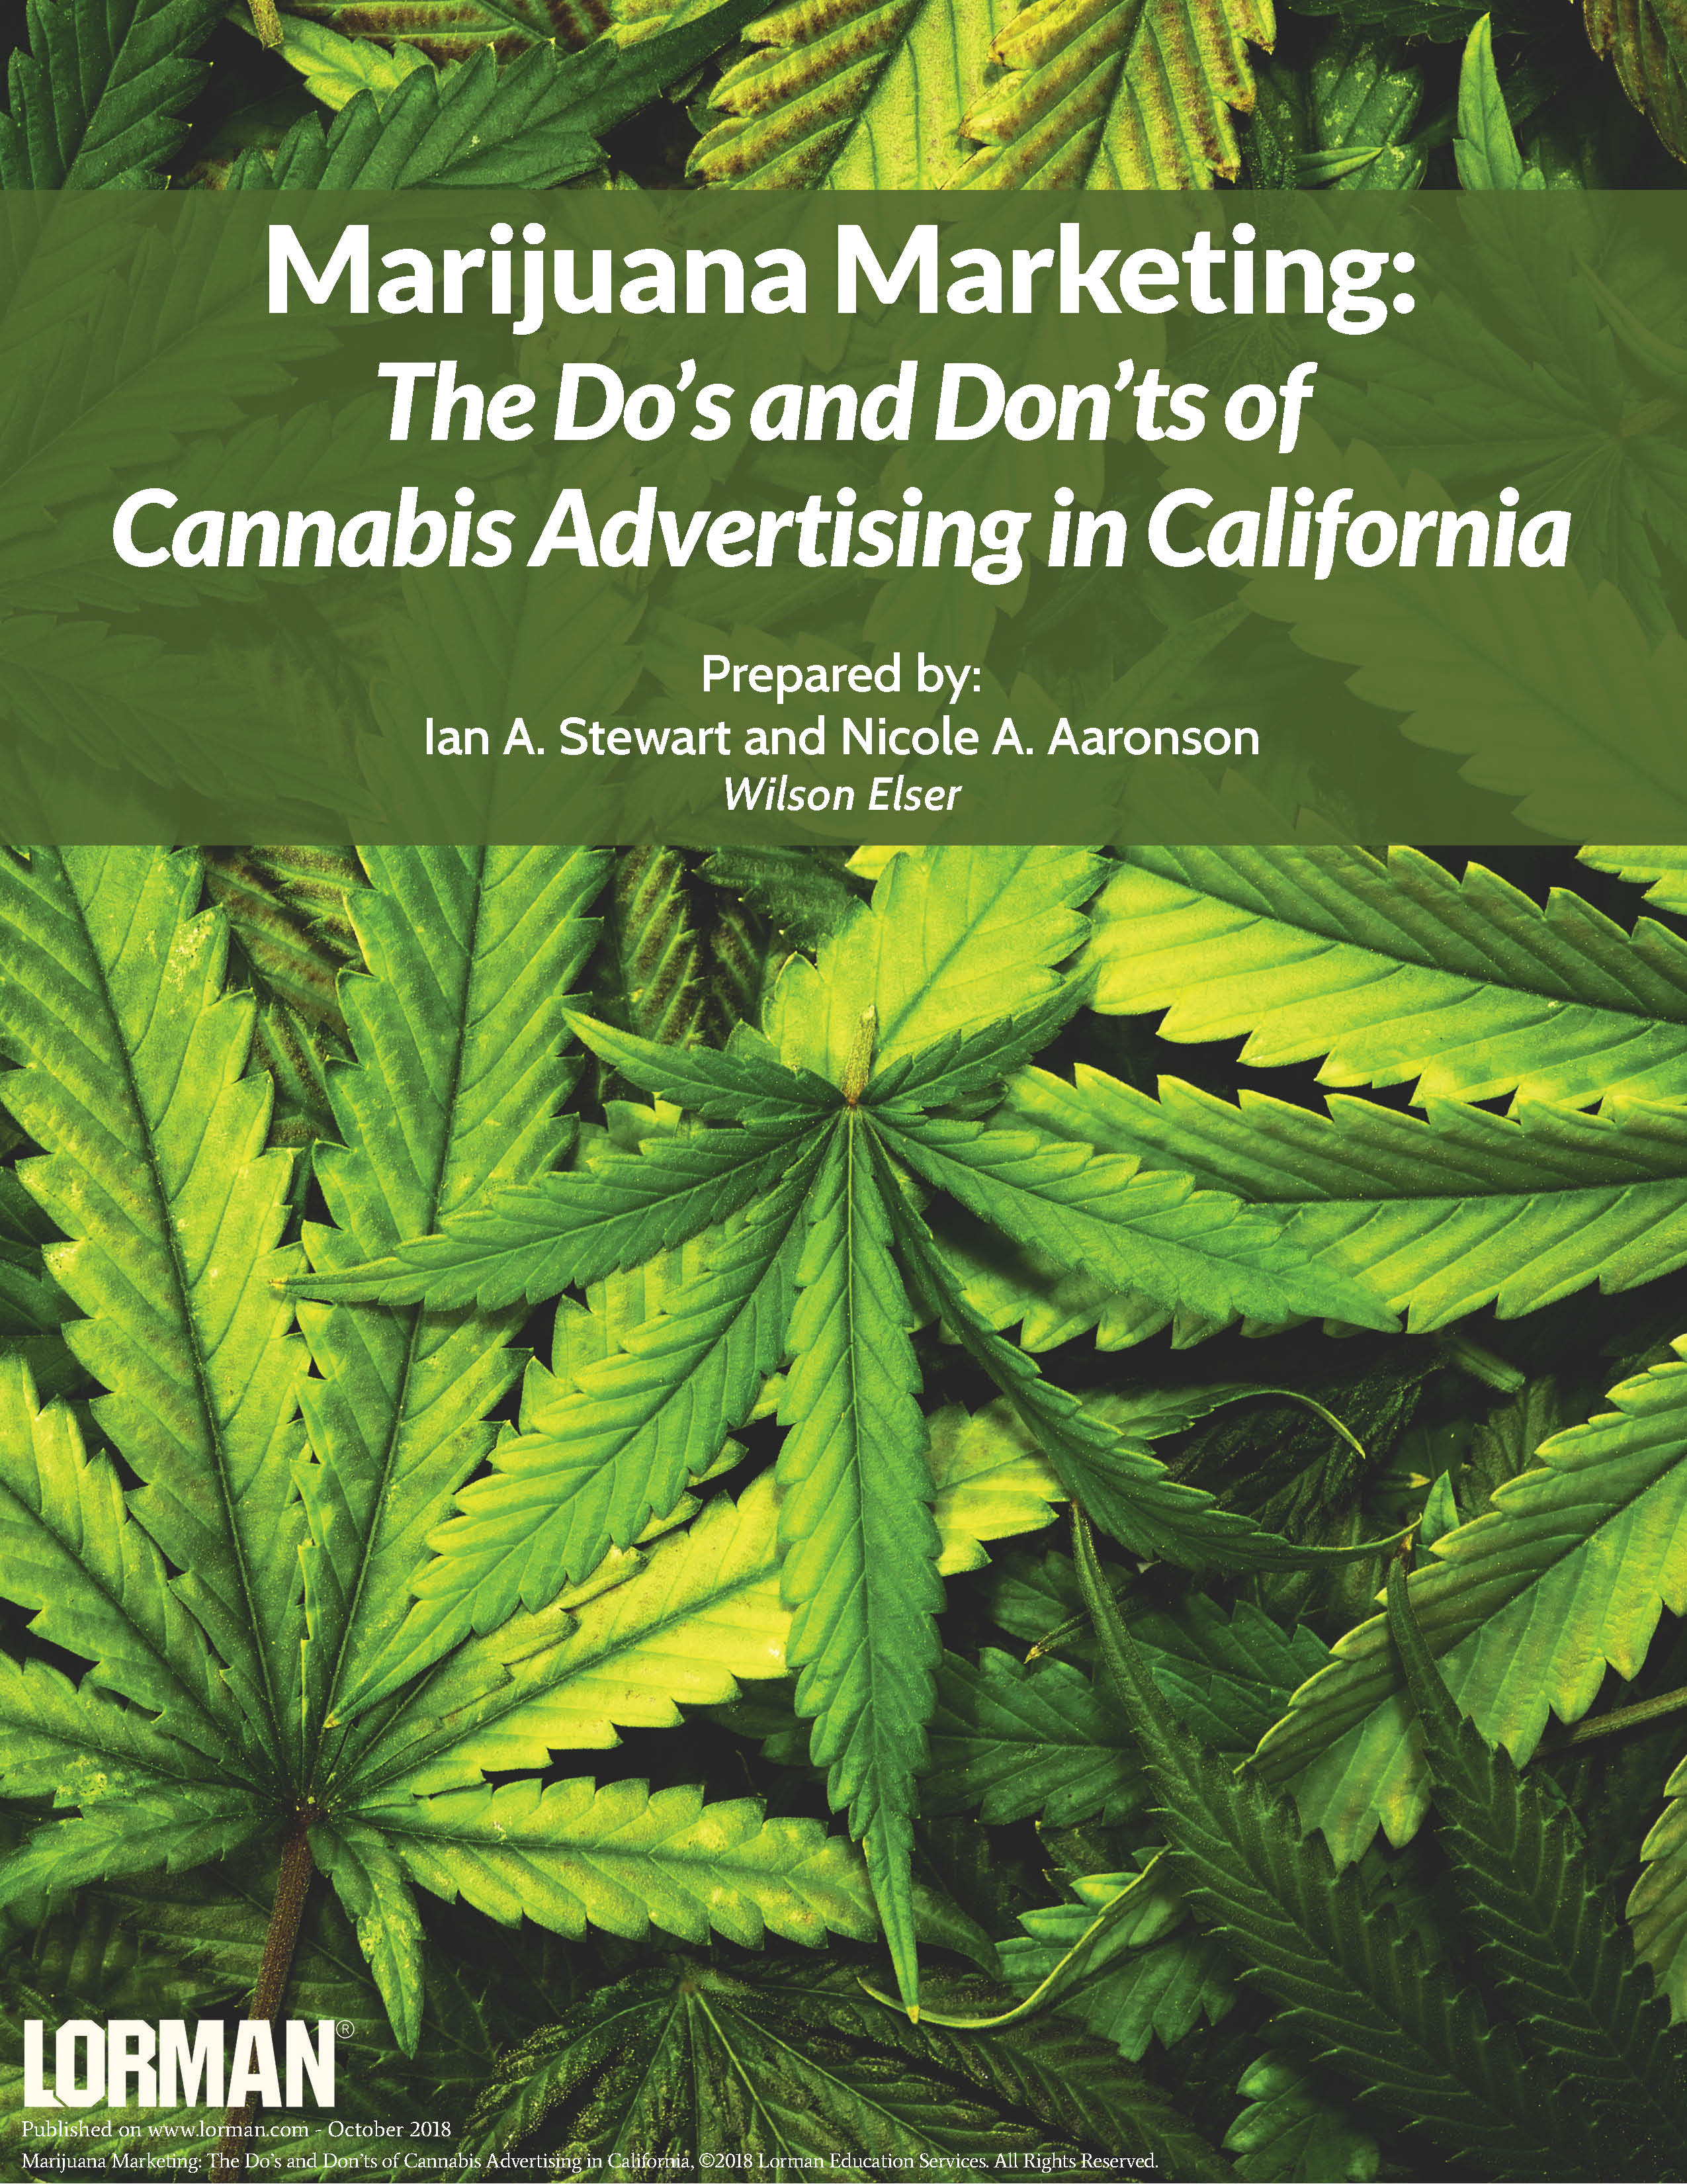 Marijuana Marketing: The Do’s and Don’ts of Cannabis Advertising in California